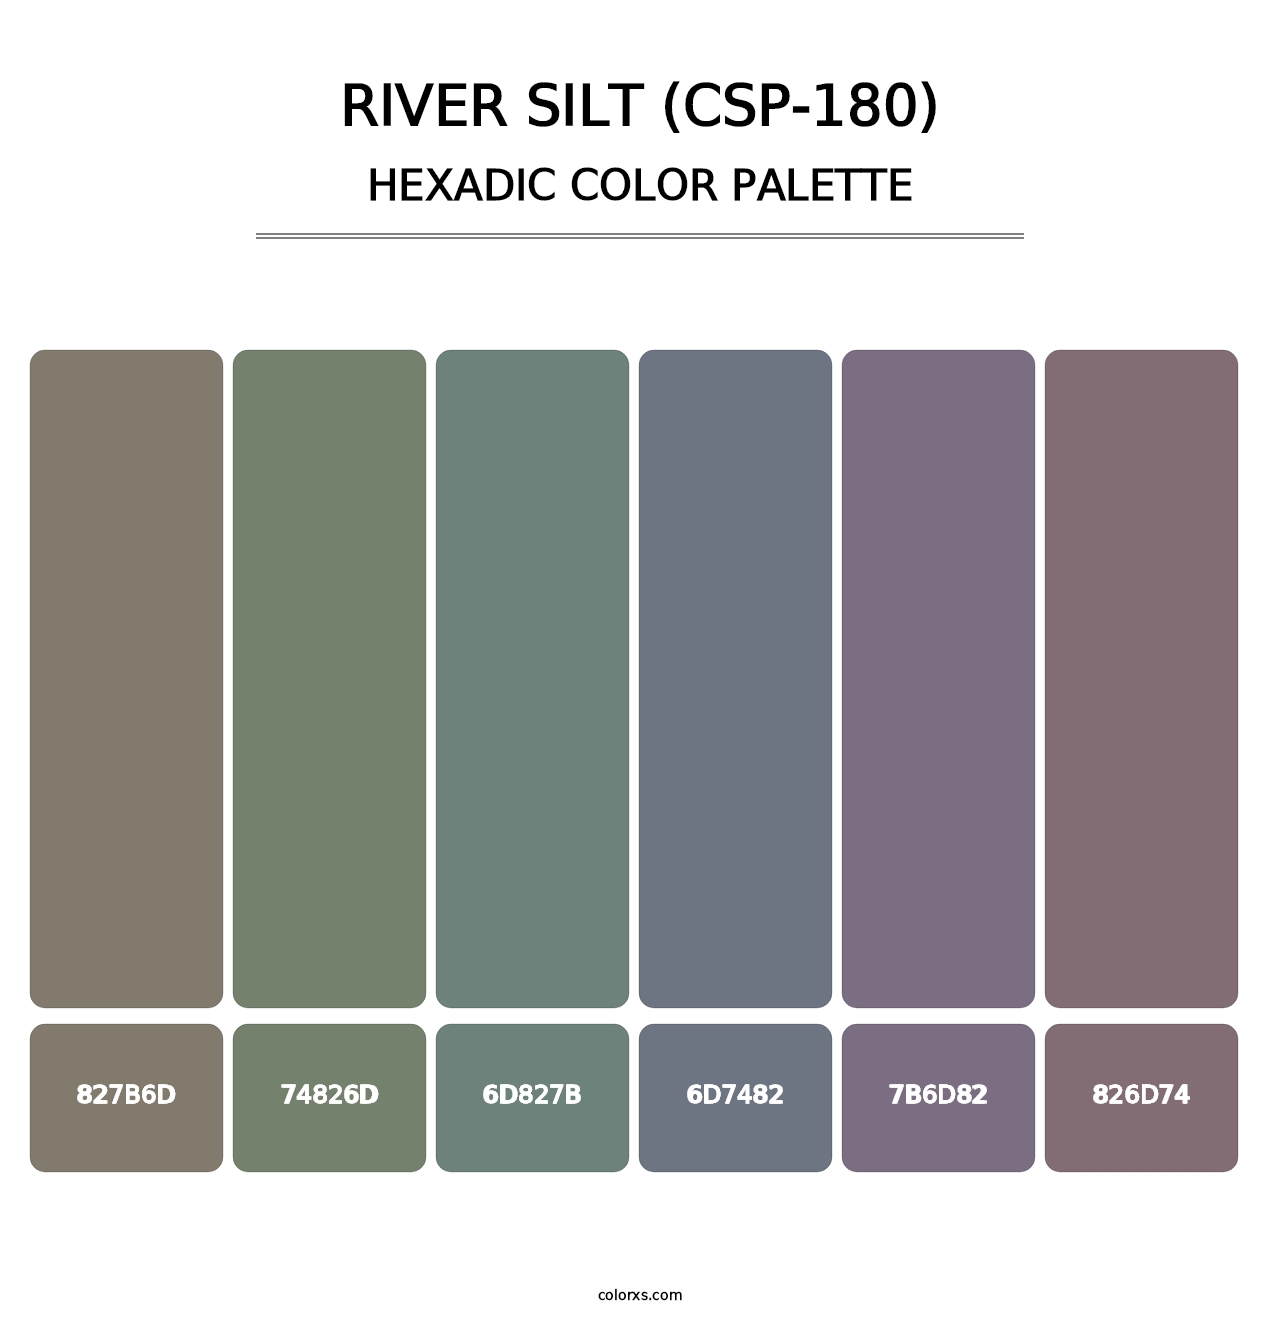 River Silt (CSP-180) - Hexadic Color Palette